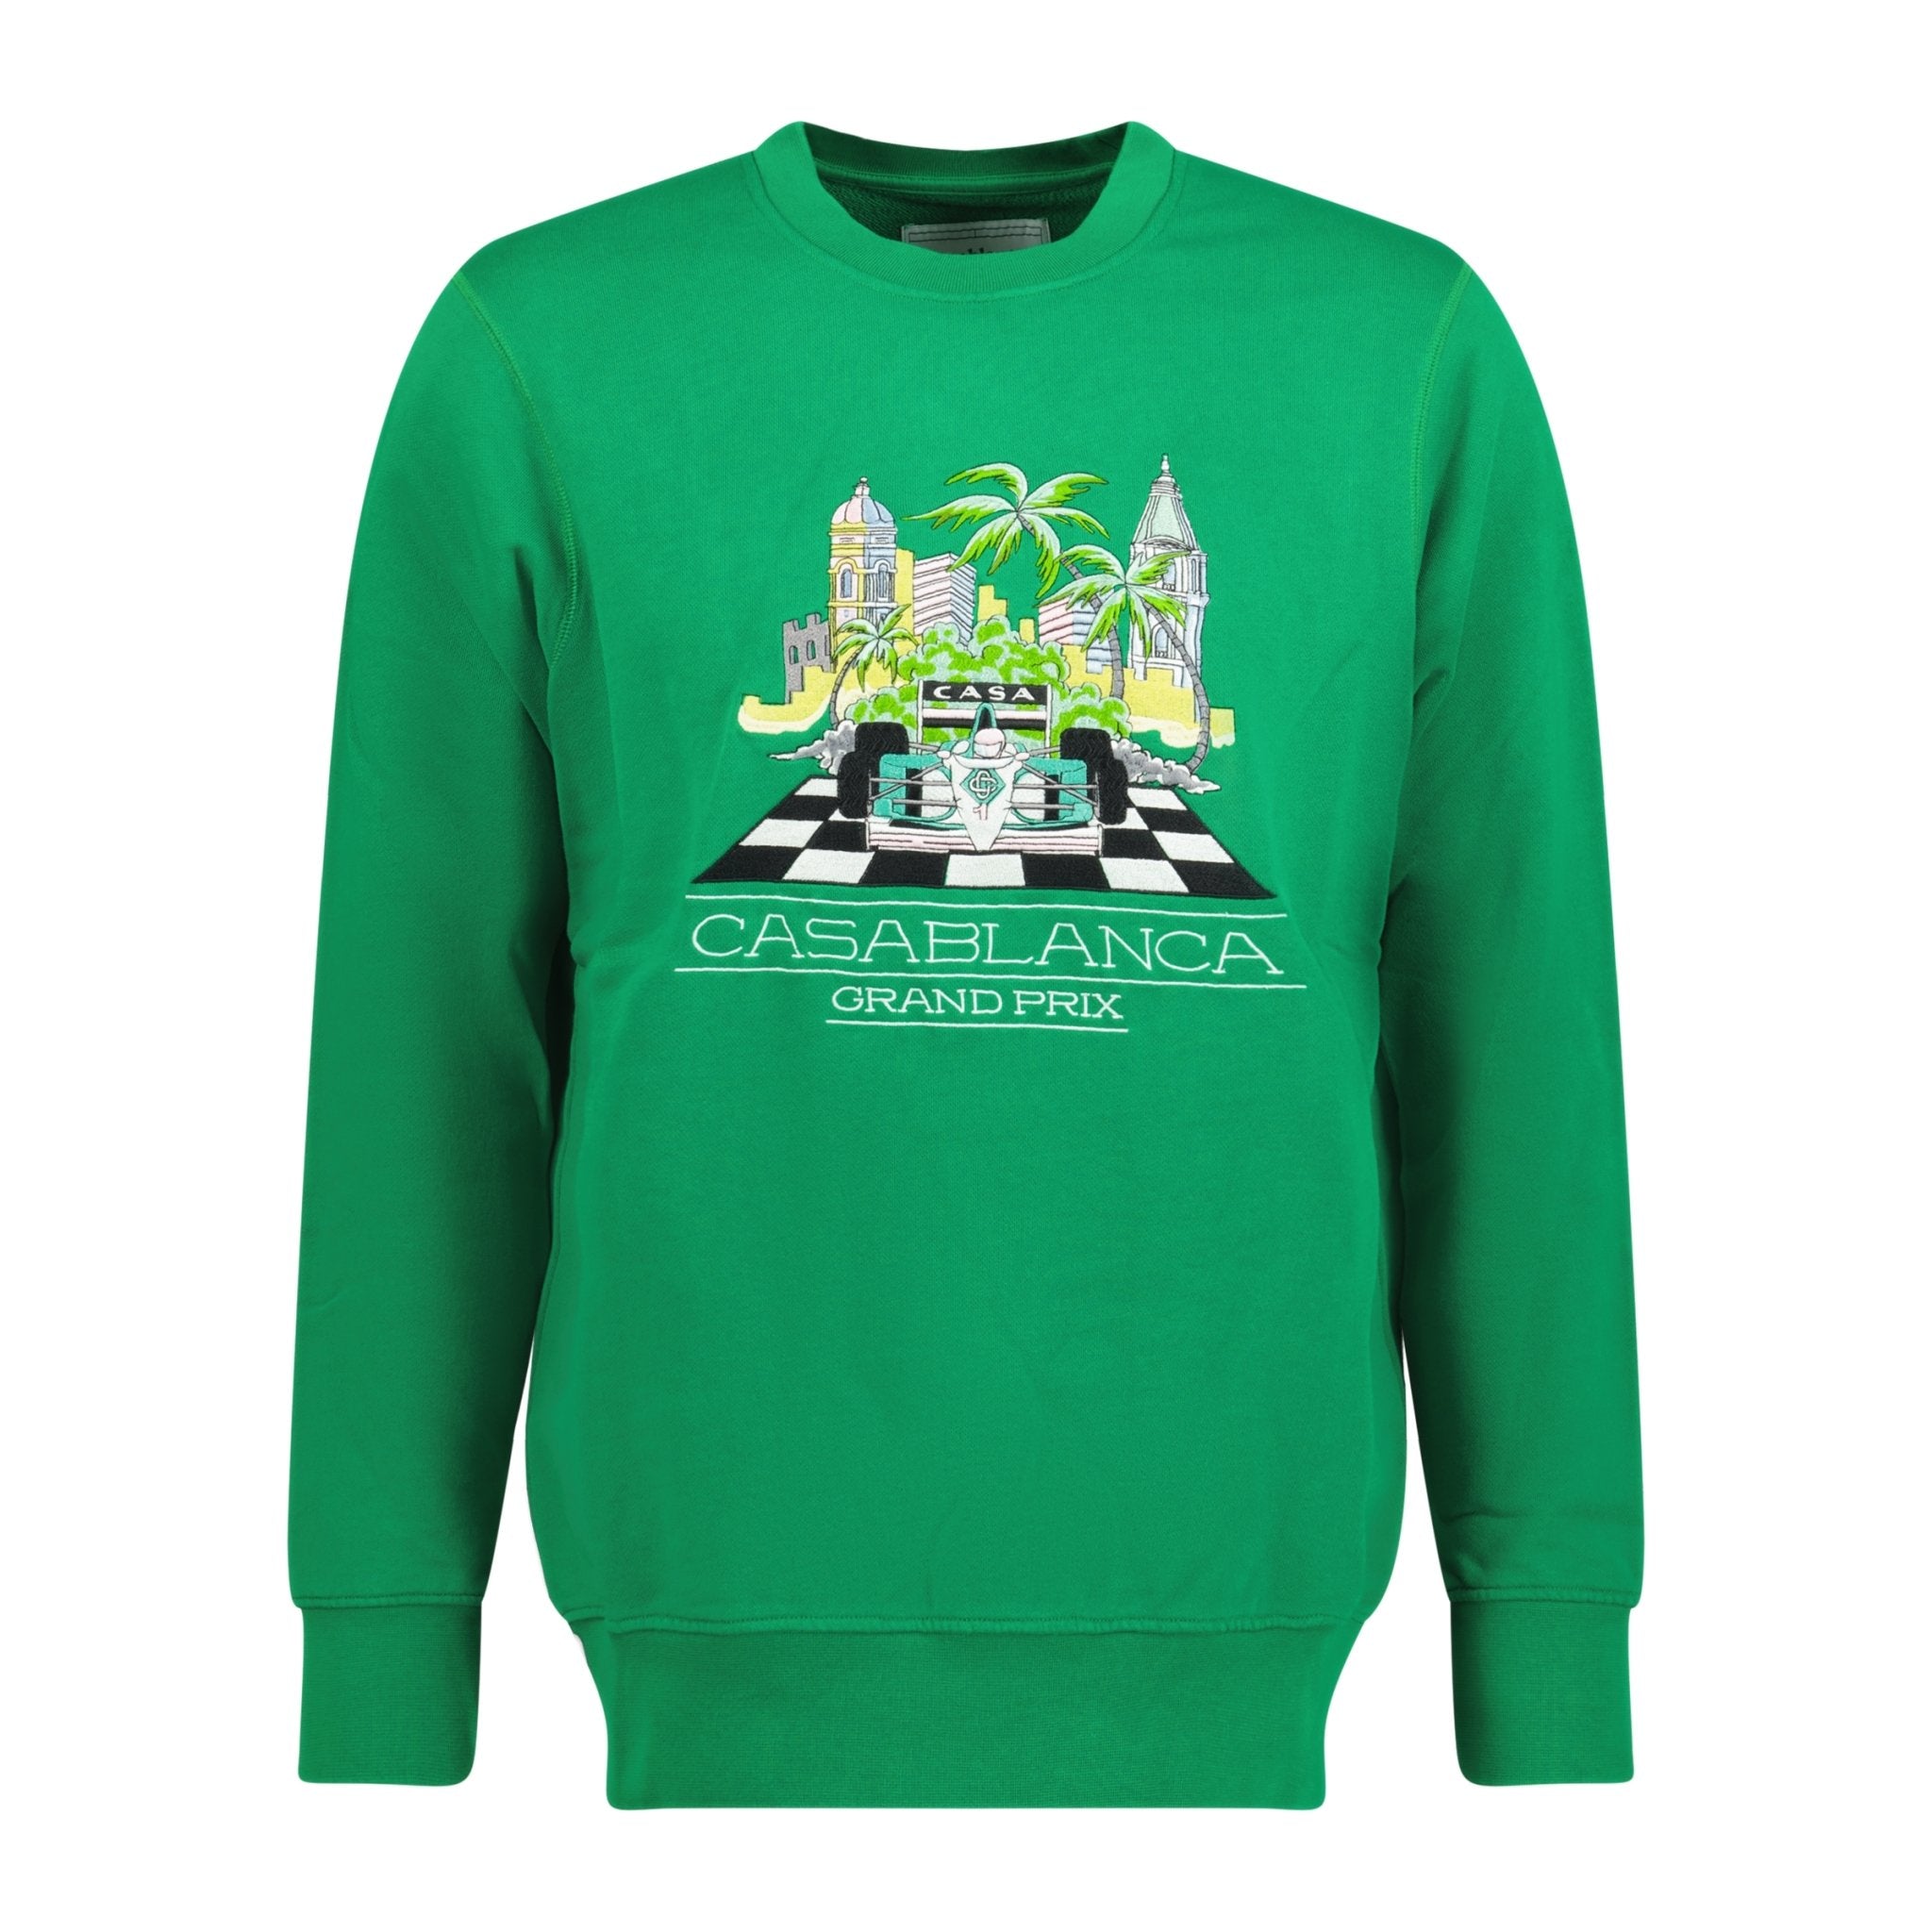 Casablanca 'FINISH LINE' Stitched Print Sweatshirt Green